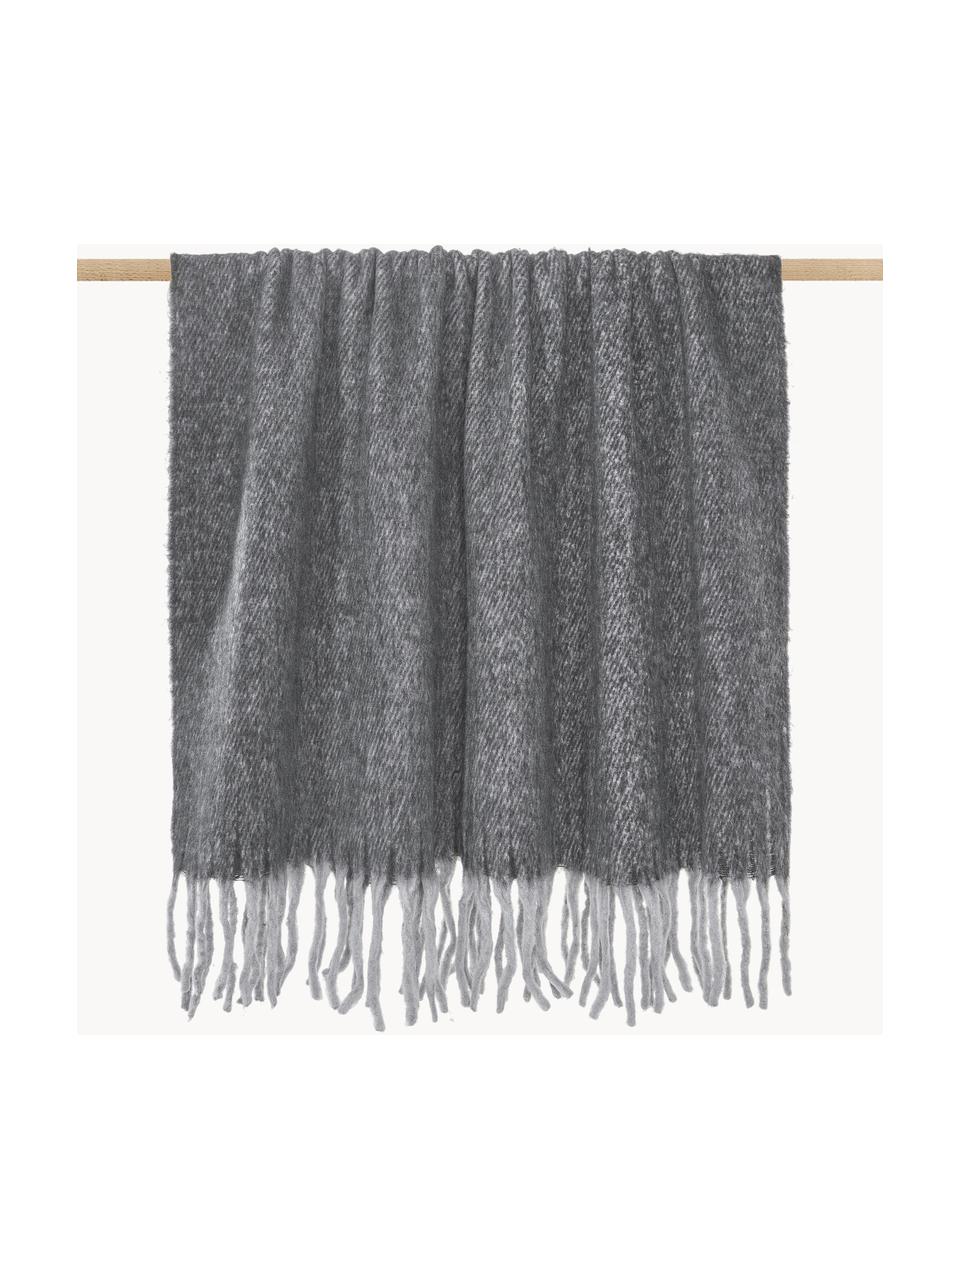 Plaid Verlee mit Fransenabschluss, 100 % Polyester, Grau, B 130 x L 170 cm